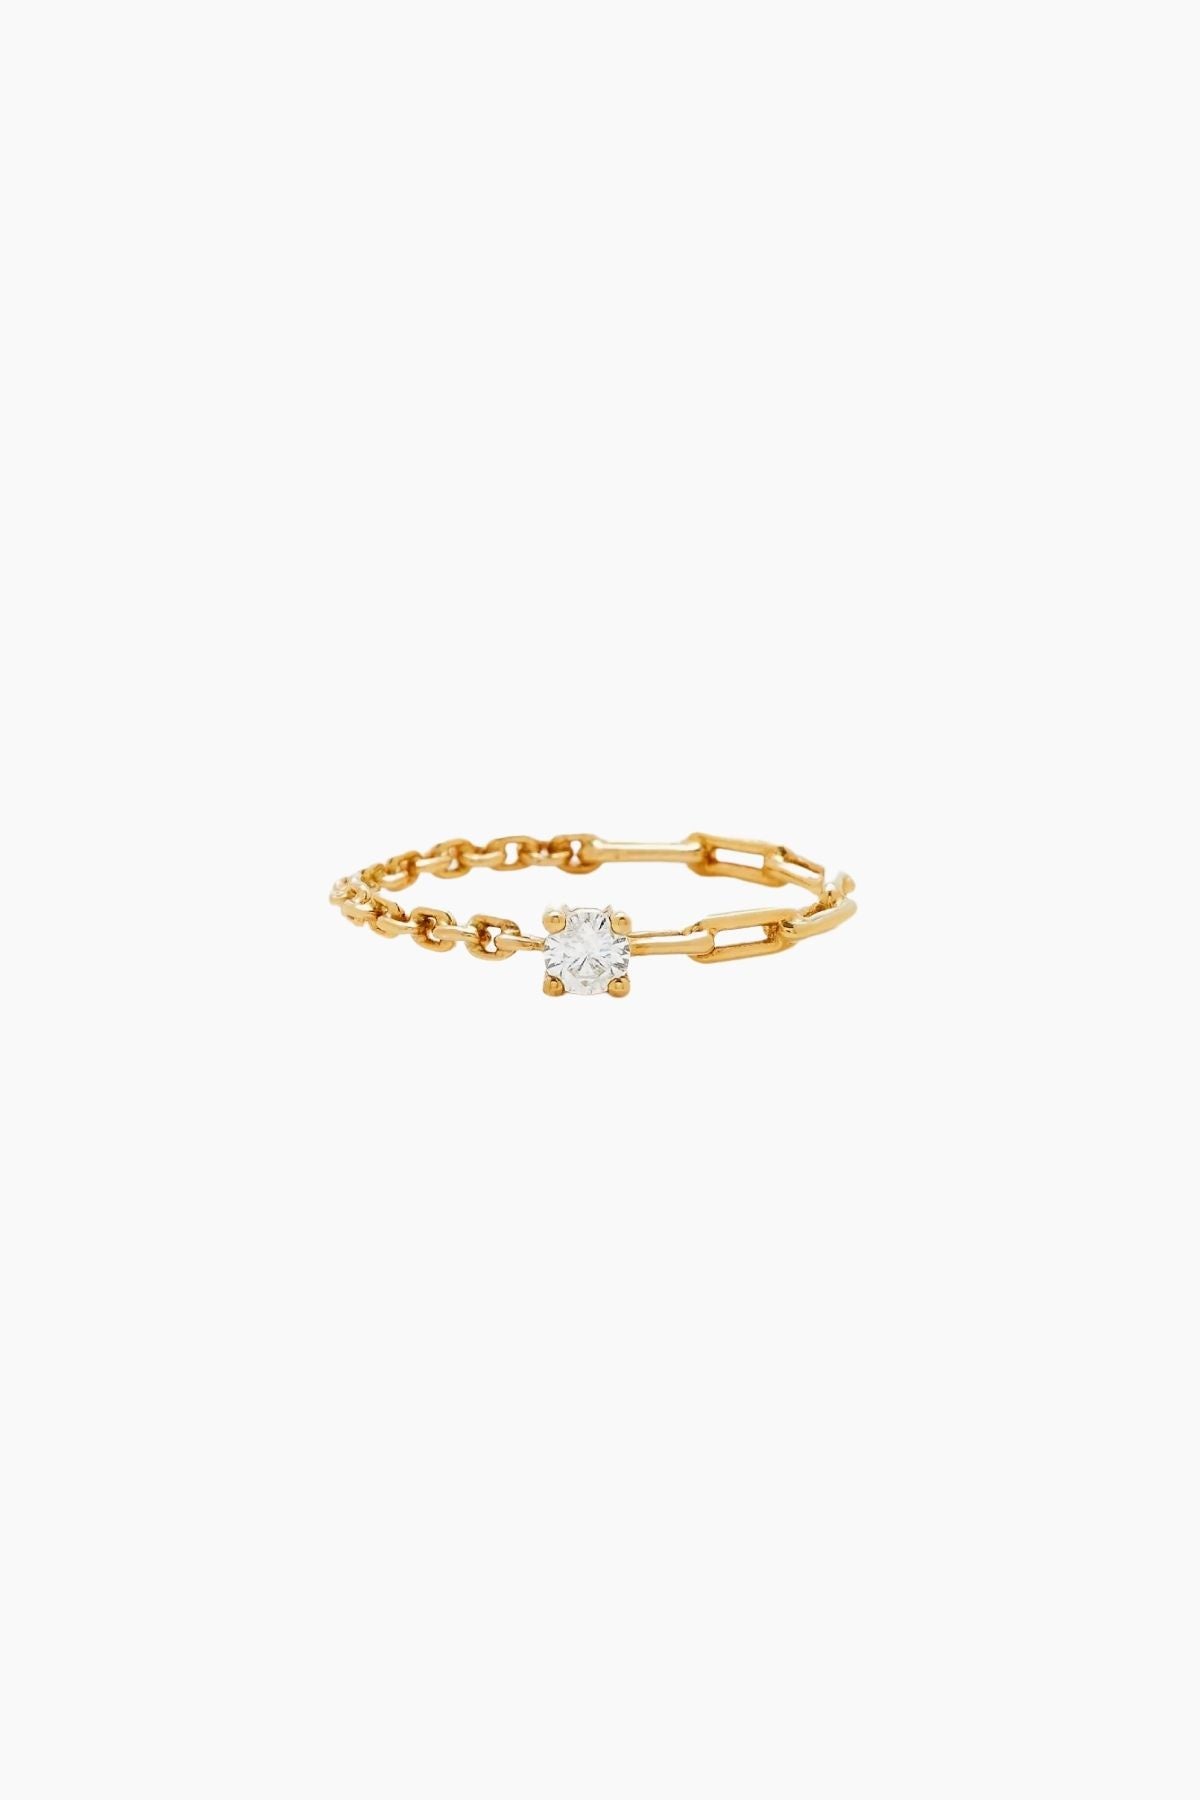 Yvonne Léon Solitaire Diamond Chain Ring - Yellow Gold